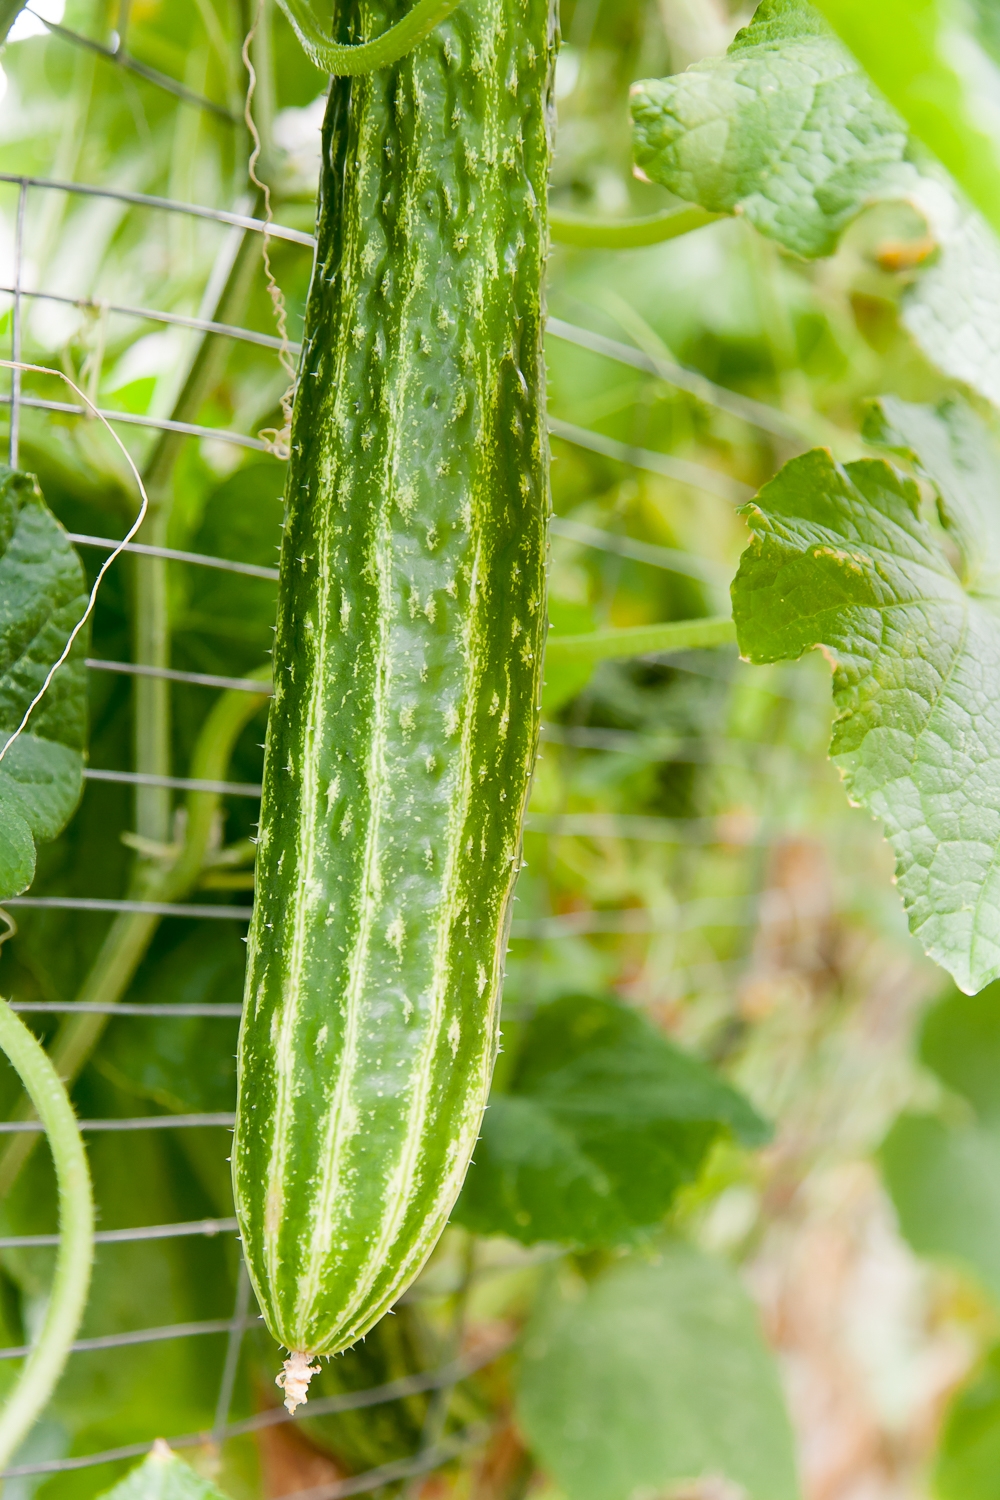 Cucumbers growing in a garden